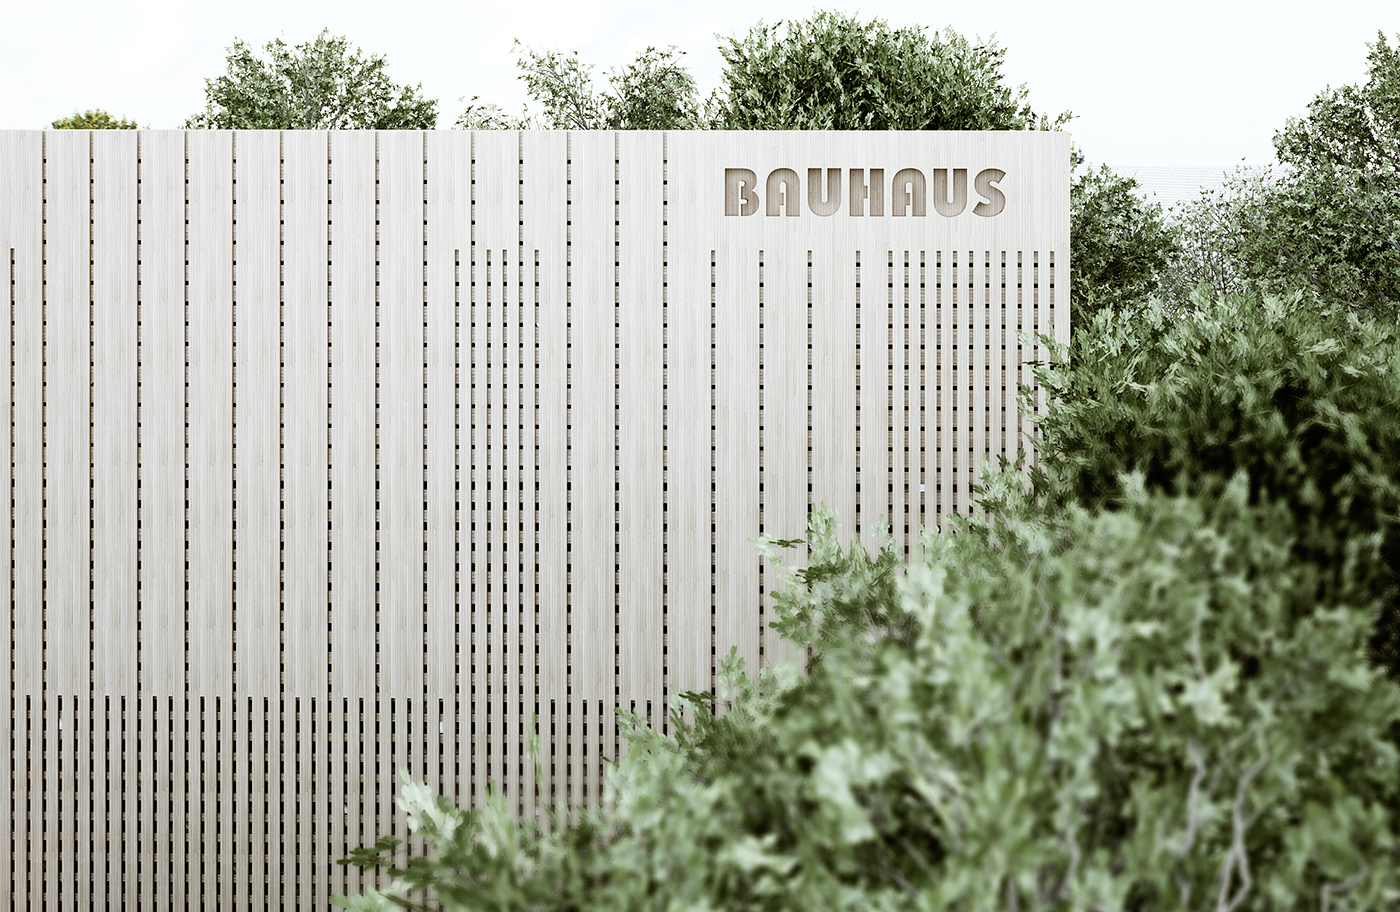 bauhaus flexible rotating museum Park wood facade adapting architecture interact design Penda chris precht